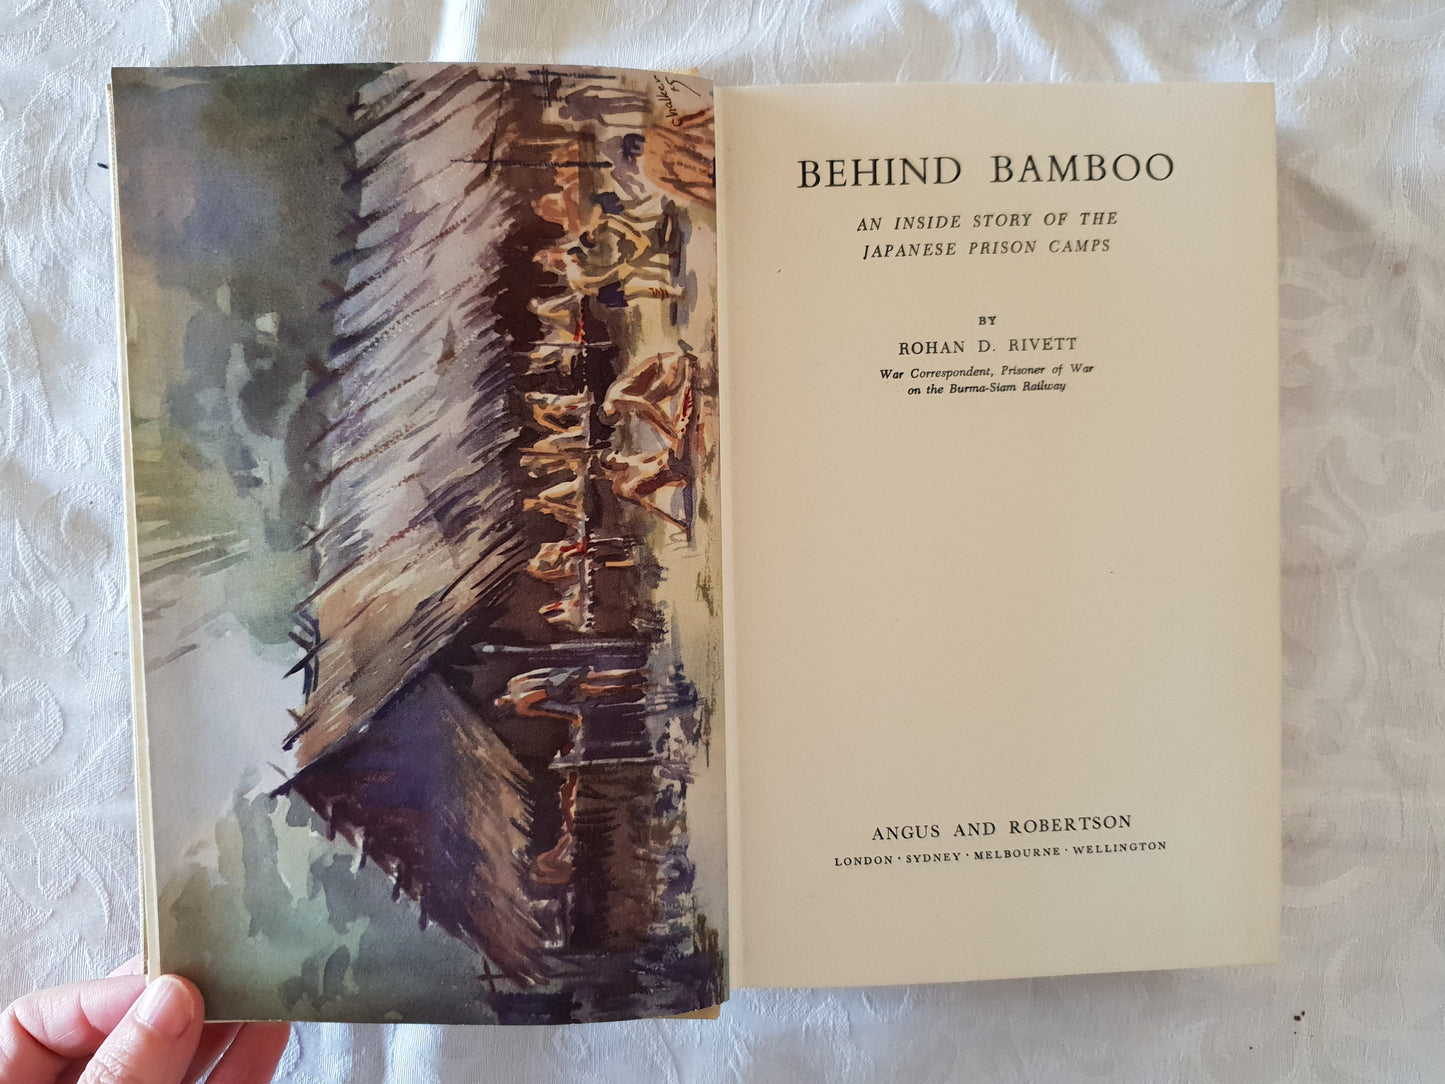 Behind Bamboo by Rohan D. Rivett